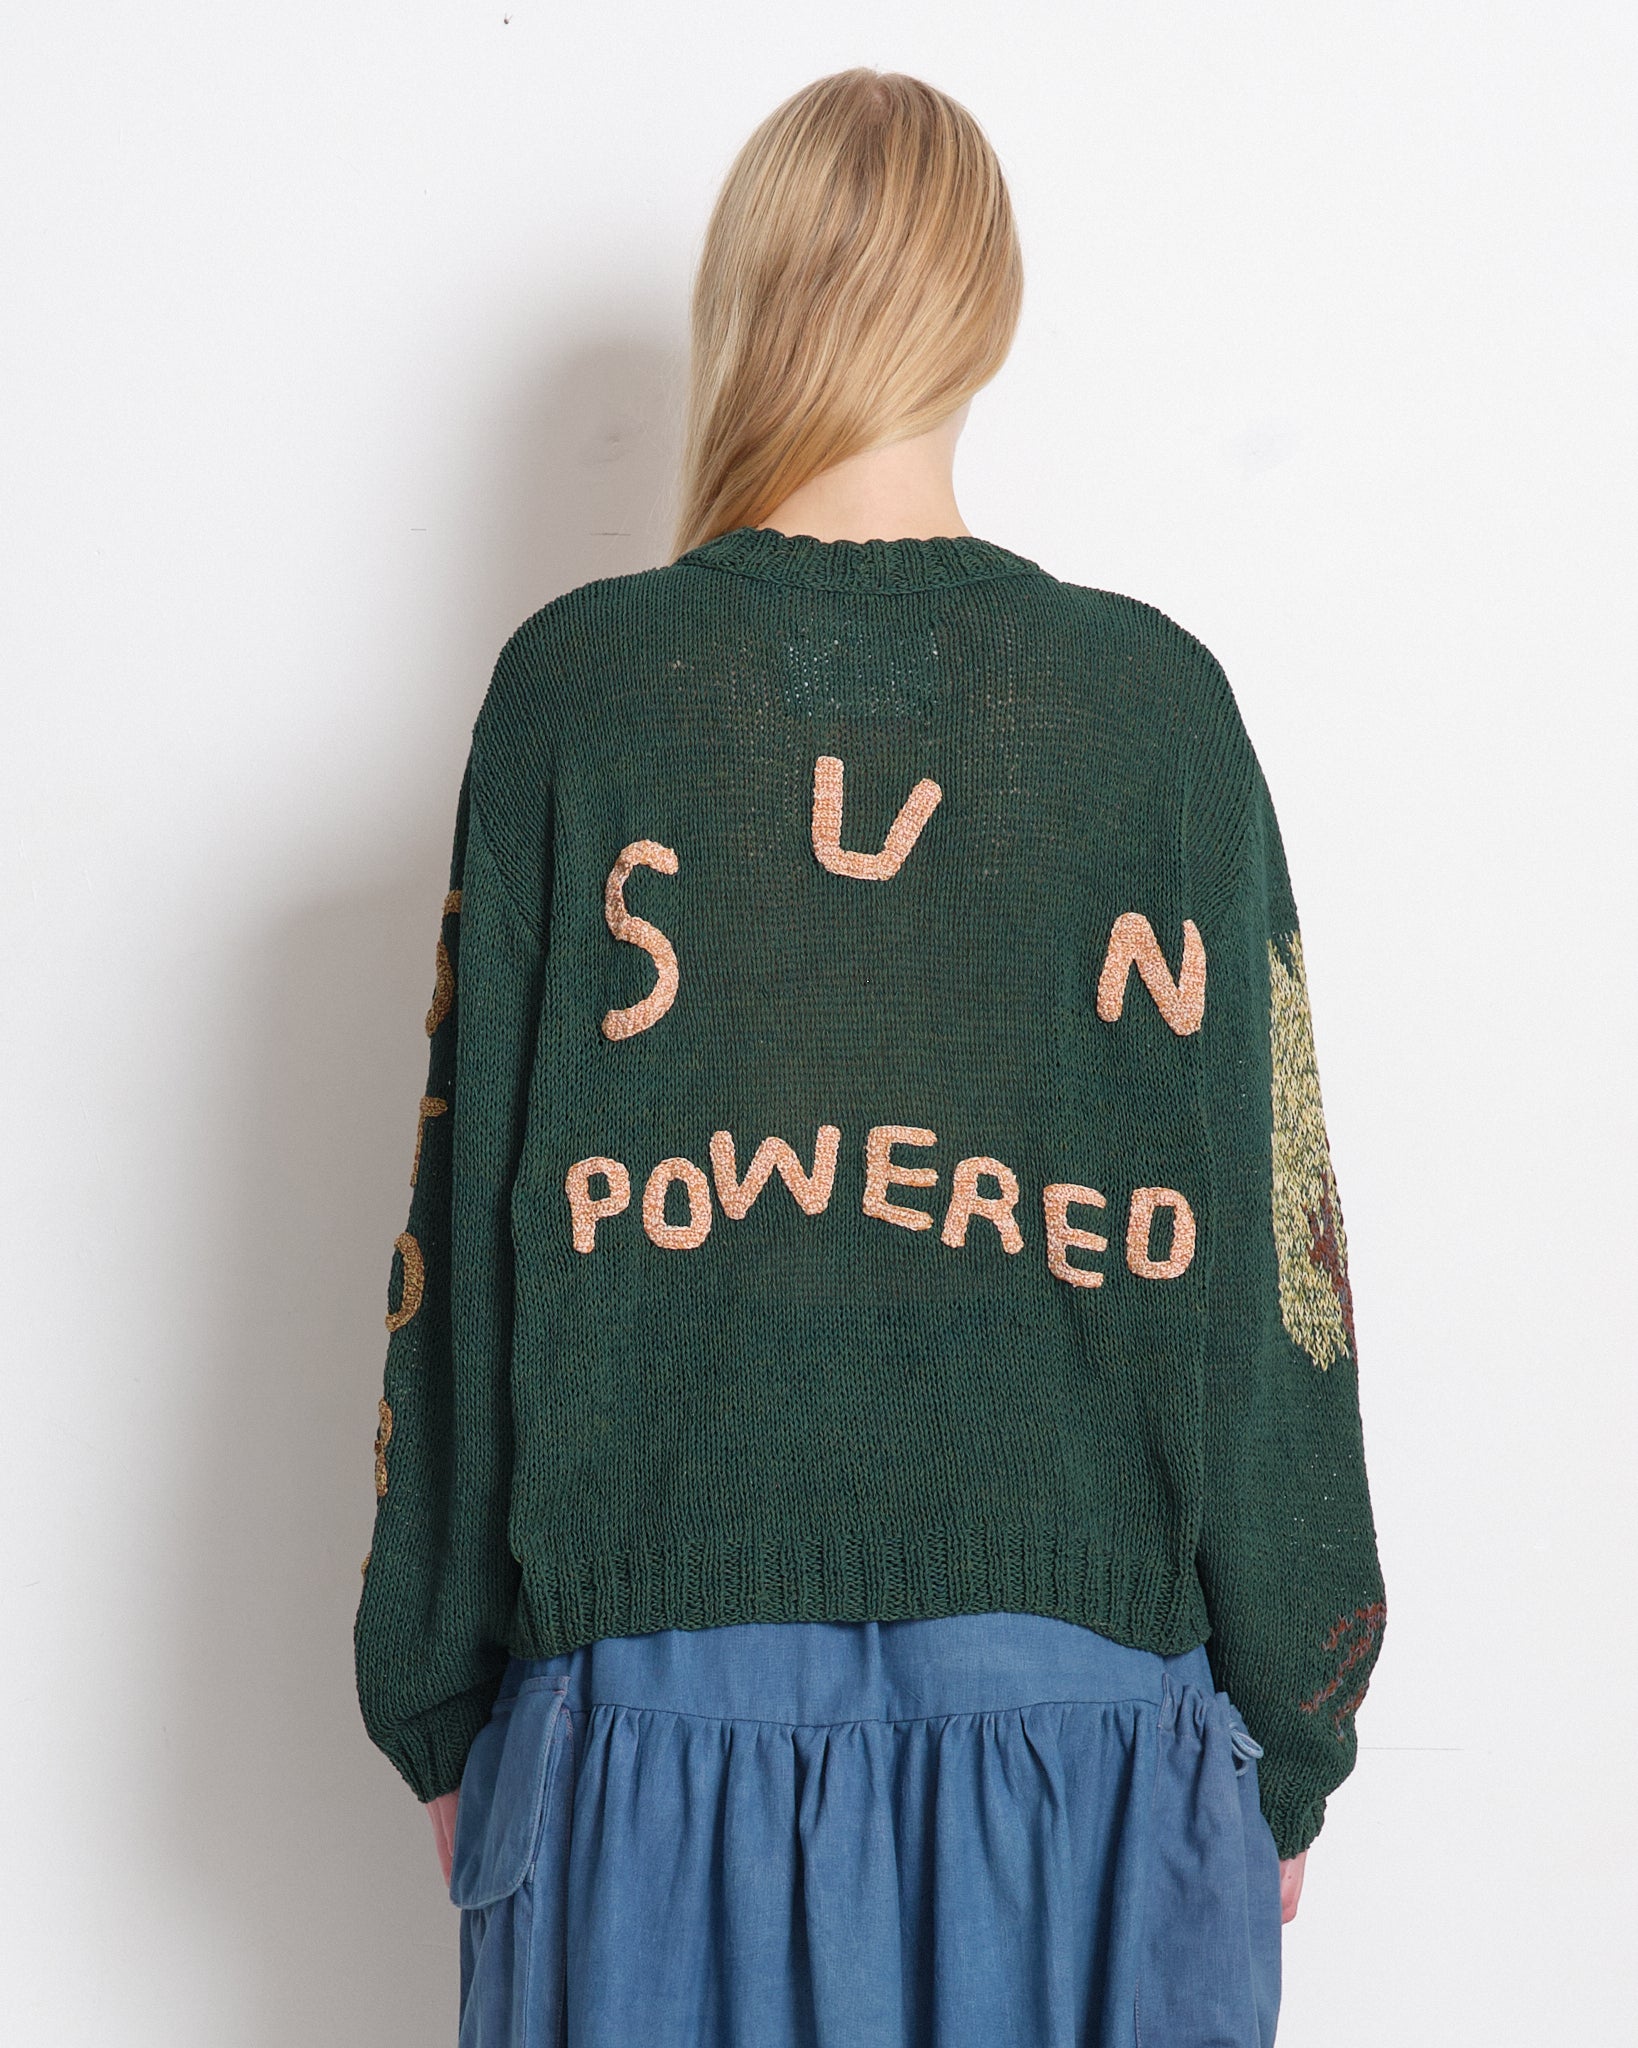 Twinsun Knit Cardigan - Sun Powered